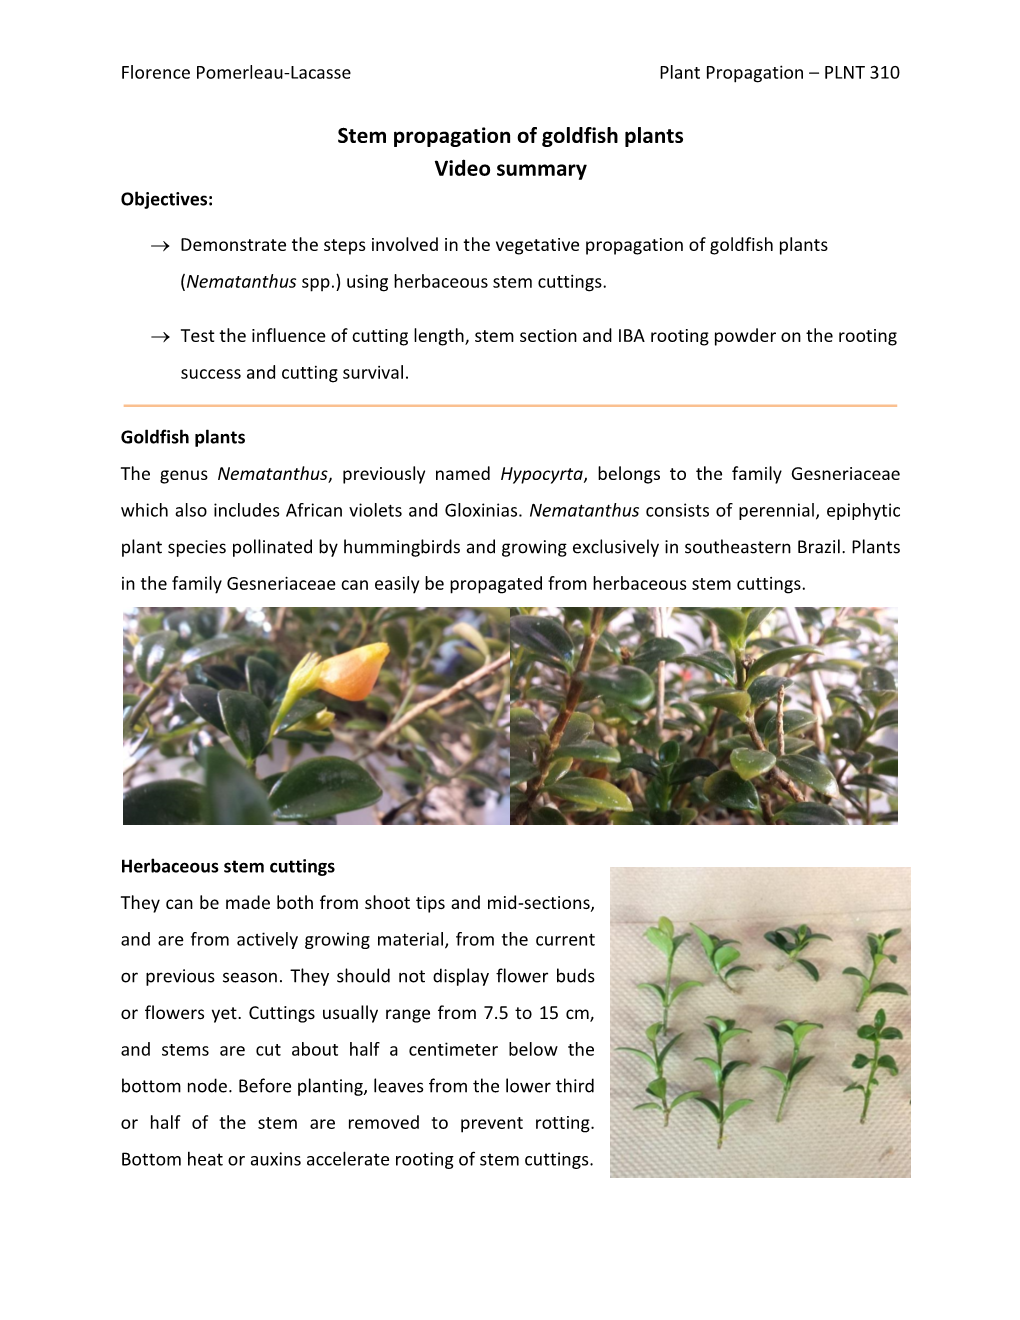 Stem Propagation of Goldfish Plants Video Summary Objectives